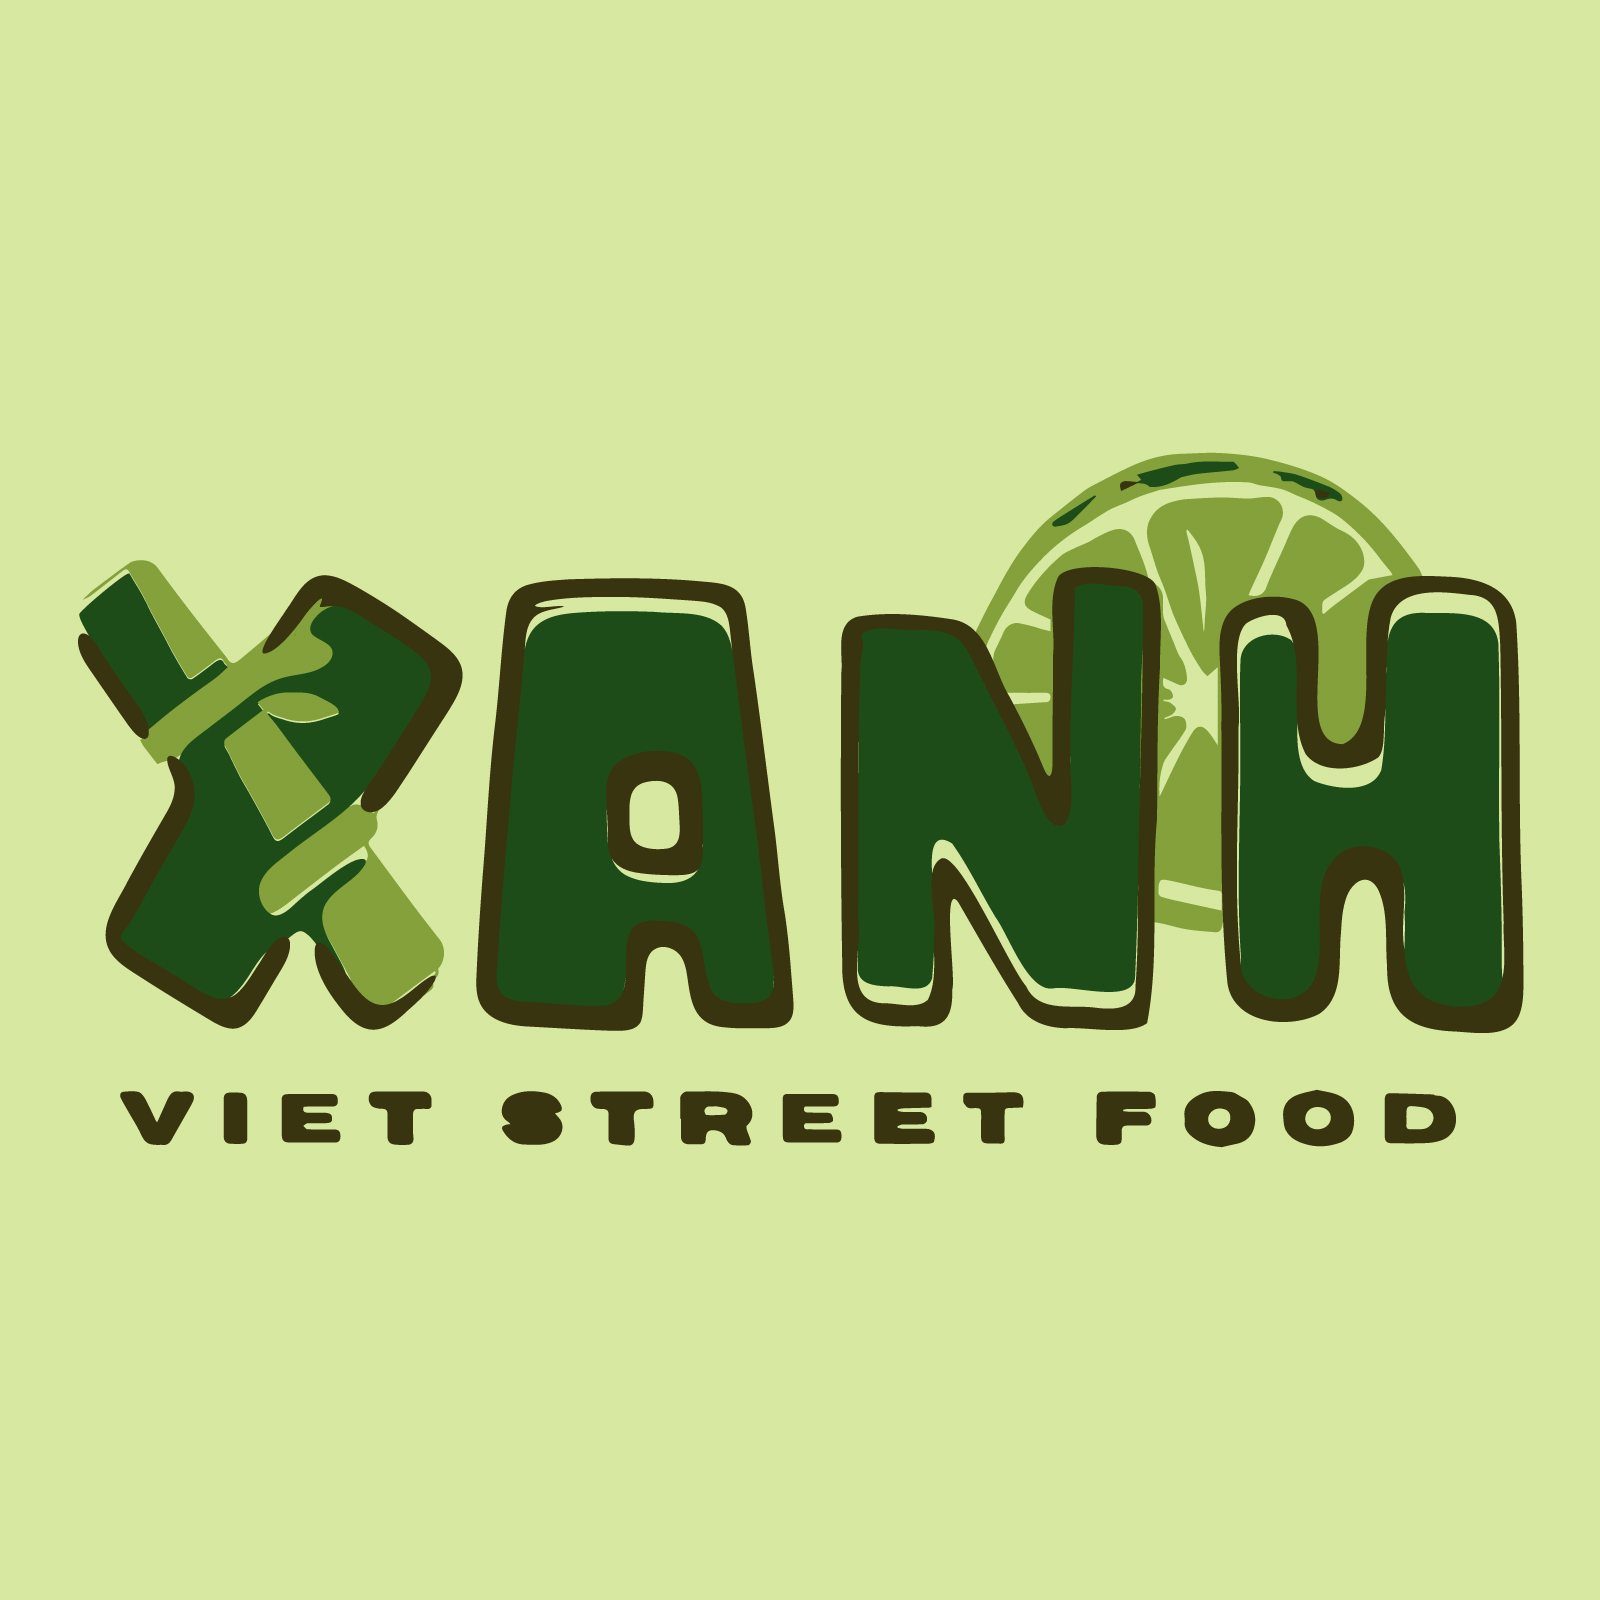 Xanh Logo on light green background